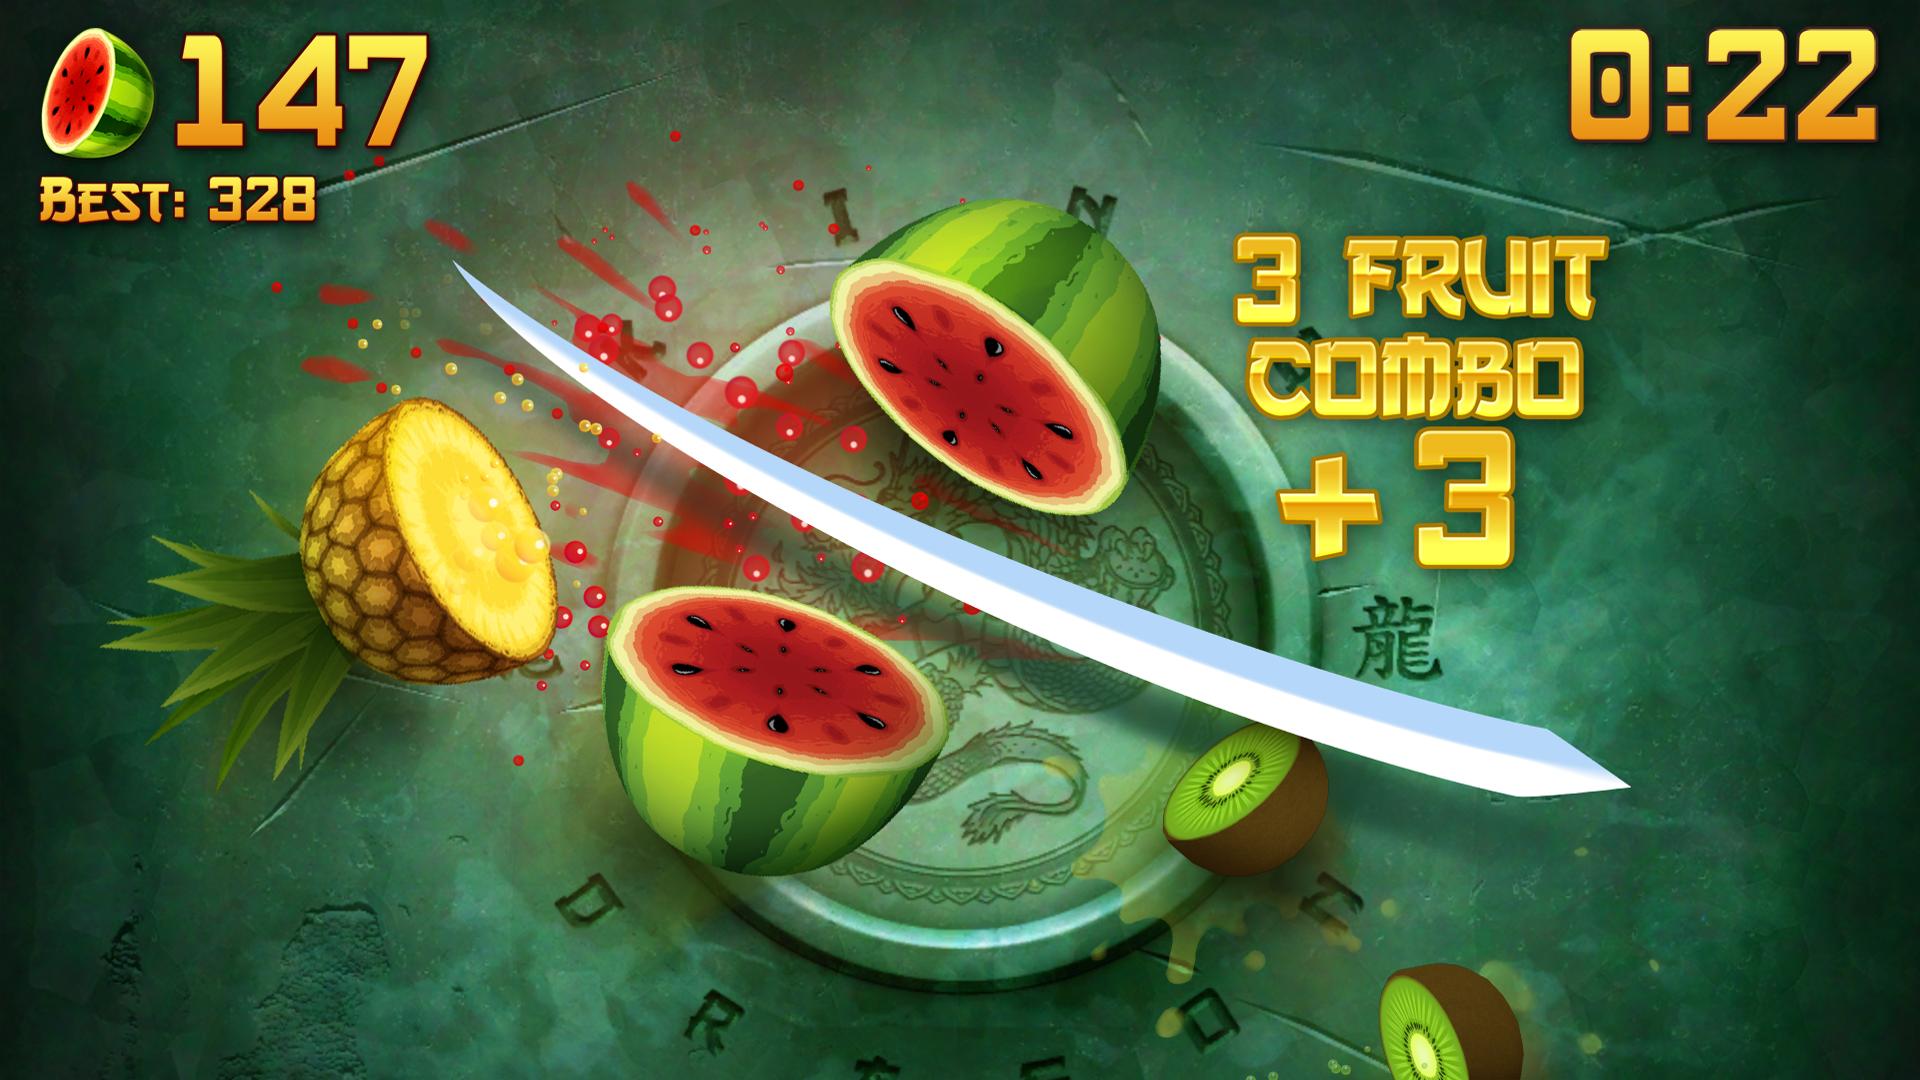 Fruit Ninja Free